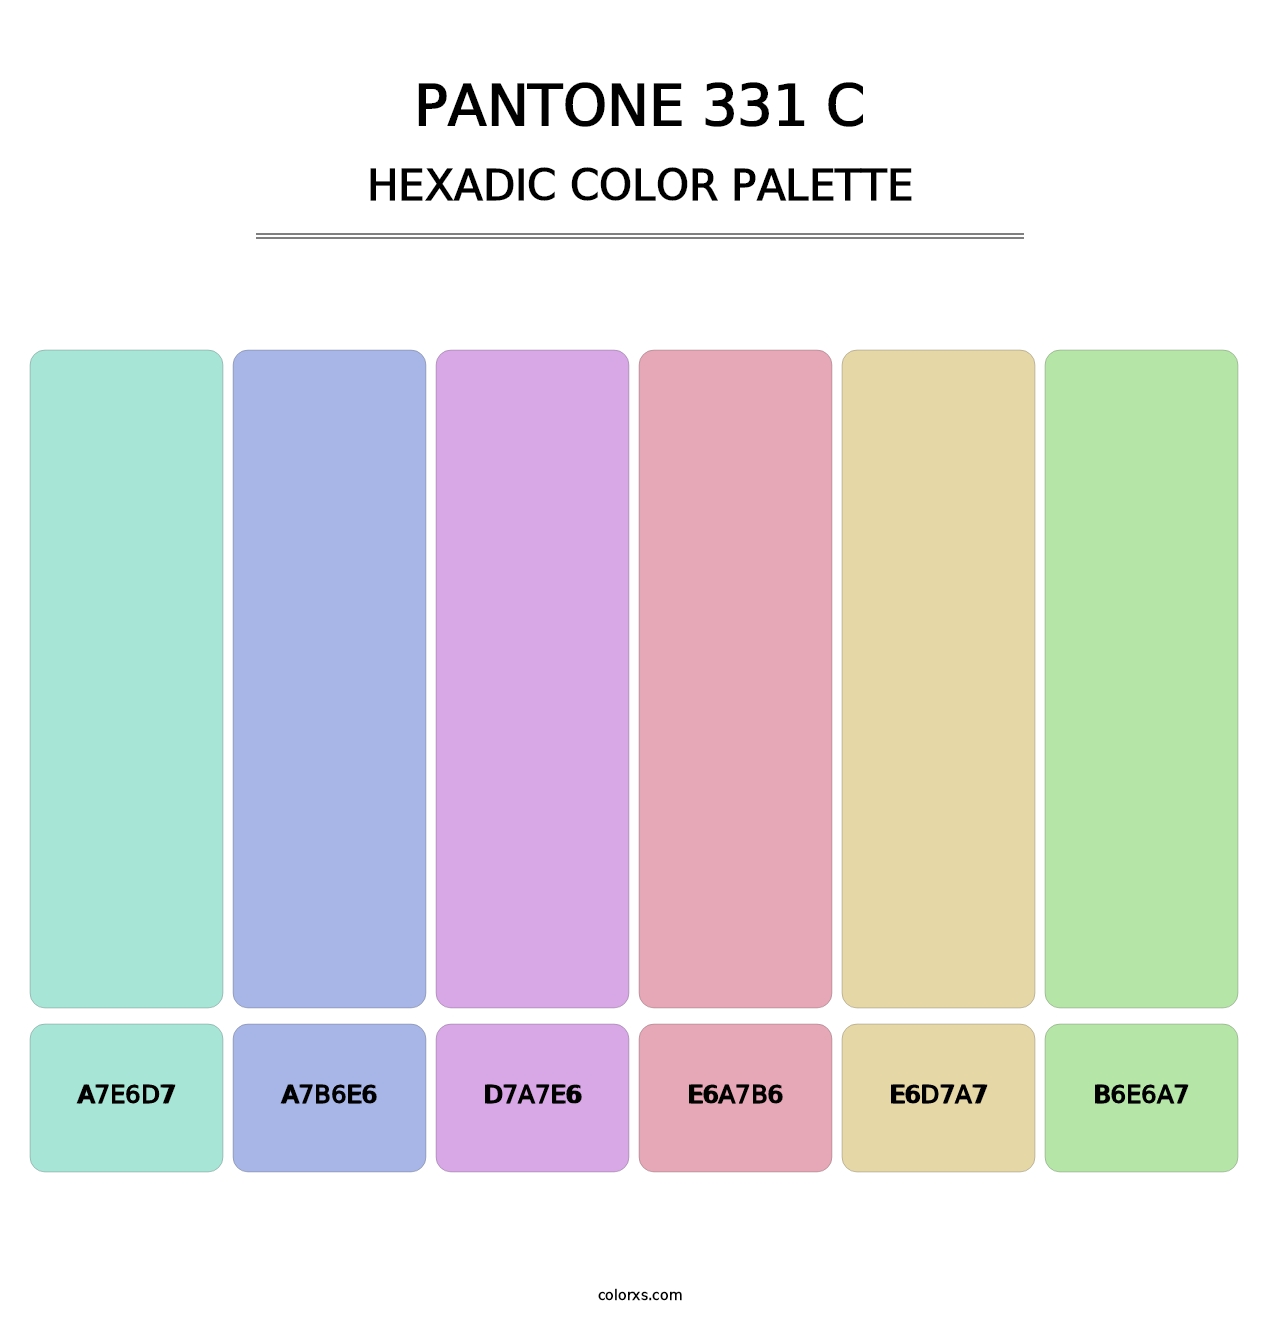 PANTONE 331 C - Hexadic Color Palette